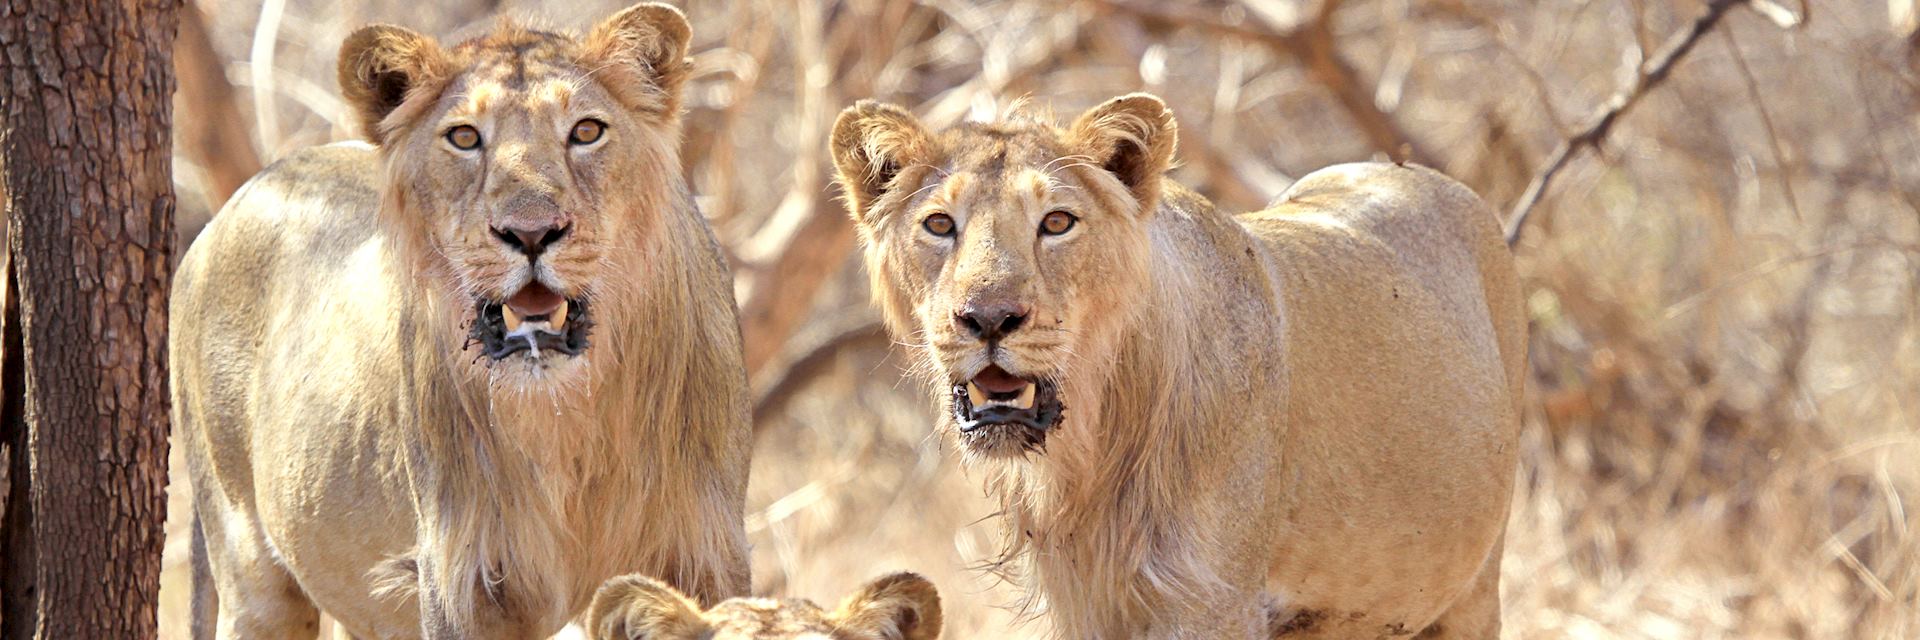 Lions in Sasan Gir National Park